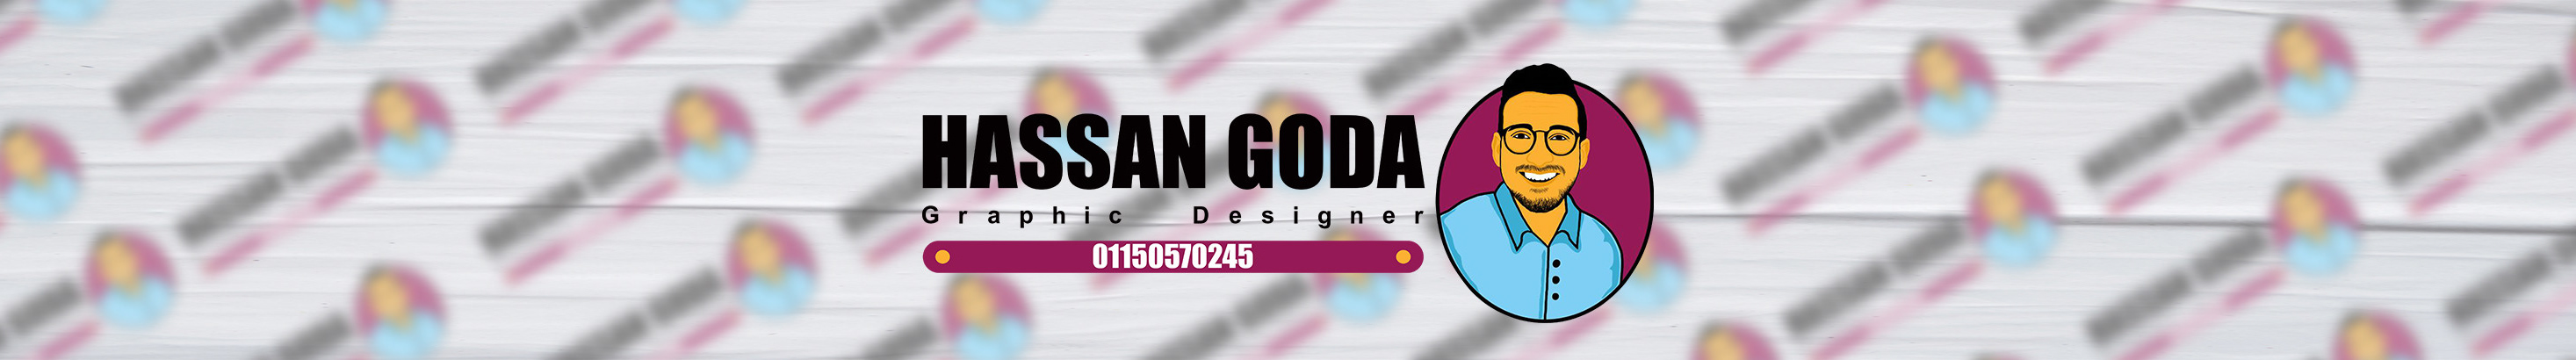 hassan goda's profile banner